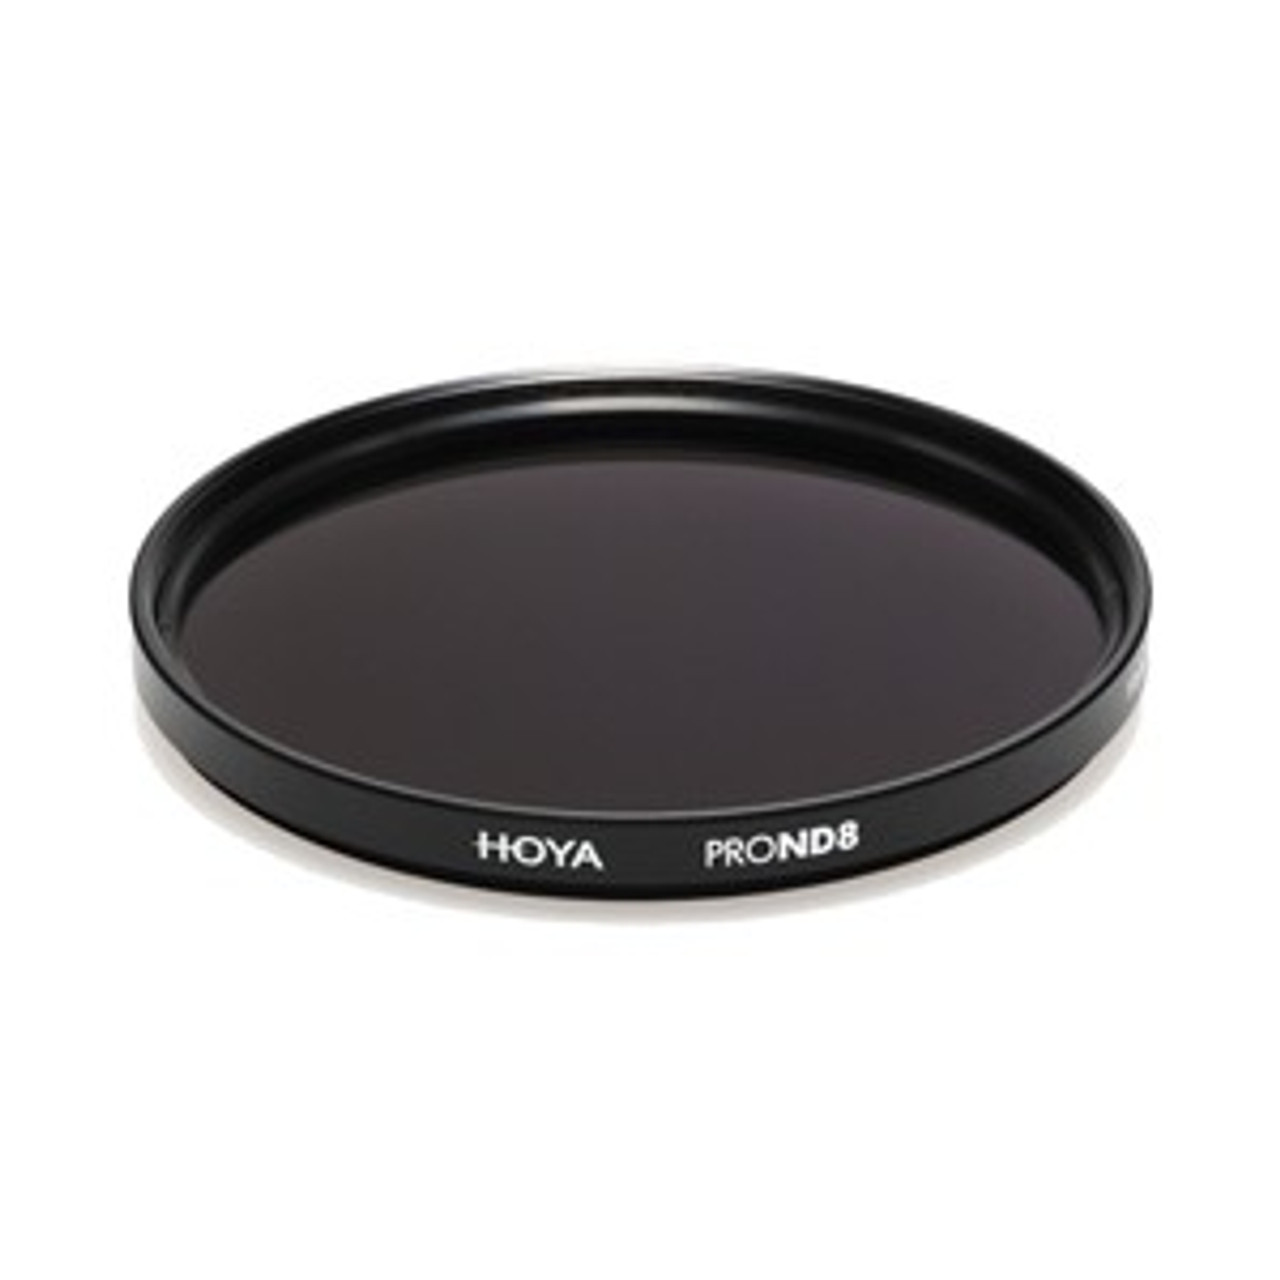 Hoya 77mm PRO ND8 Filter